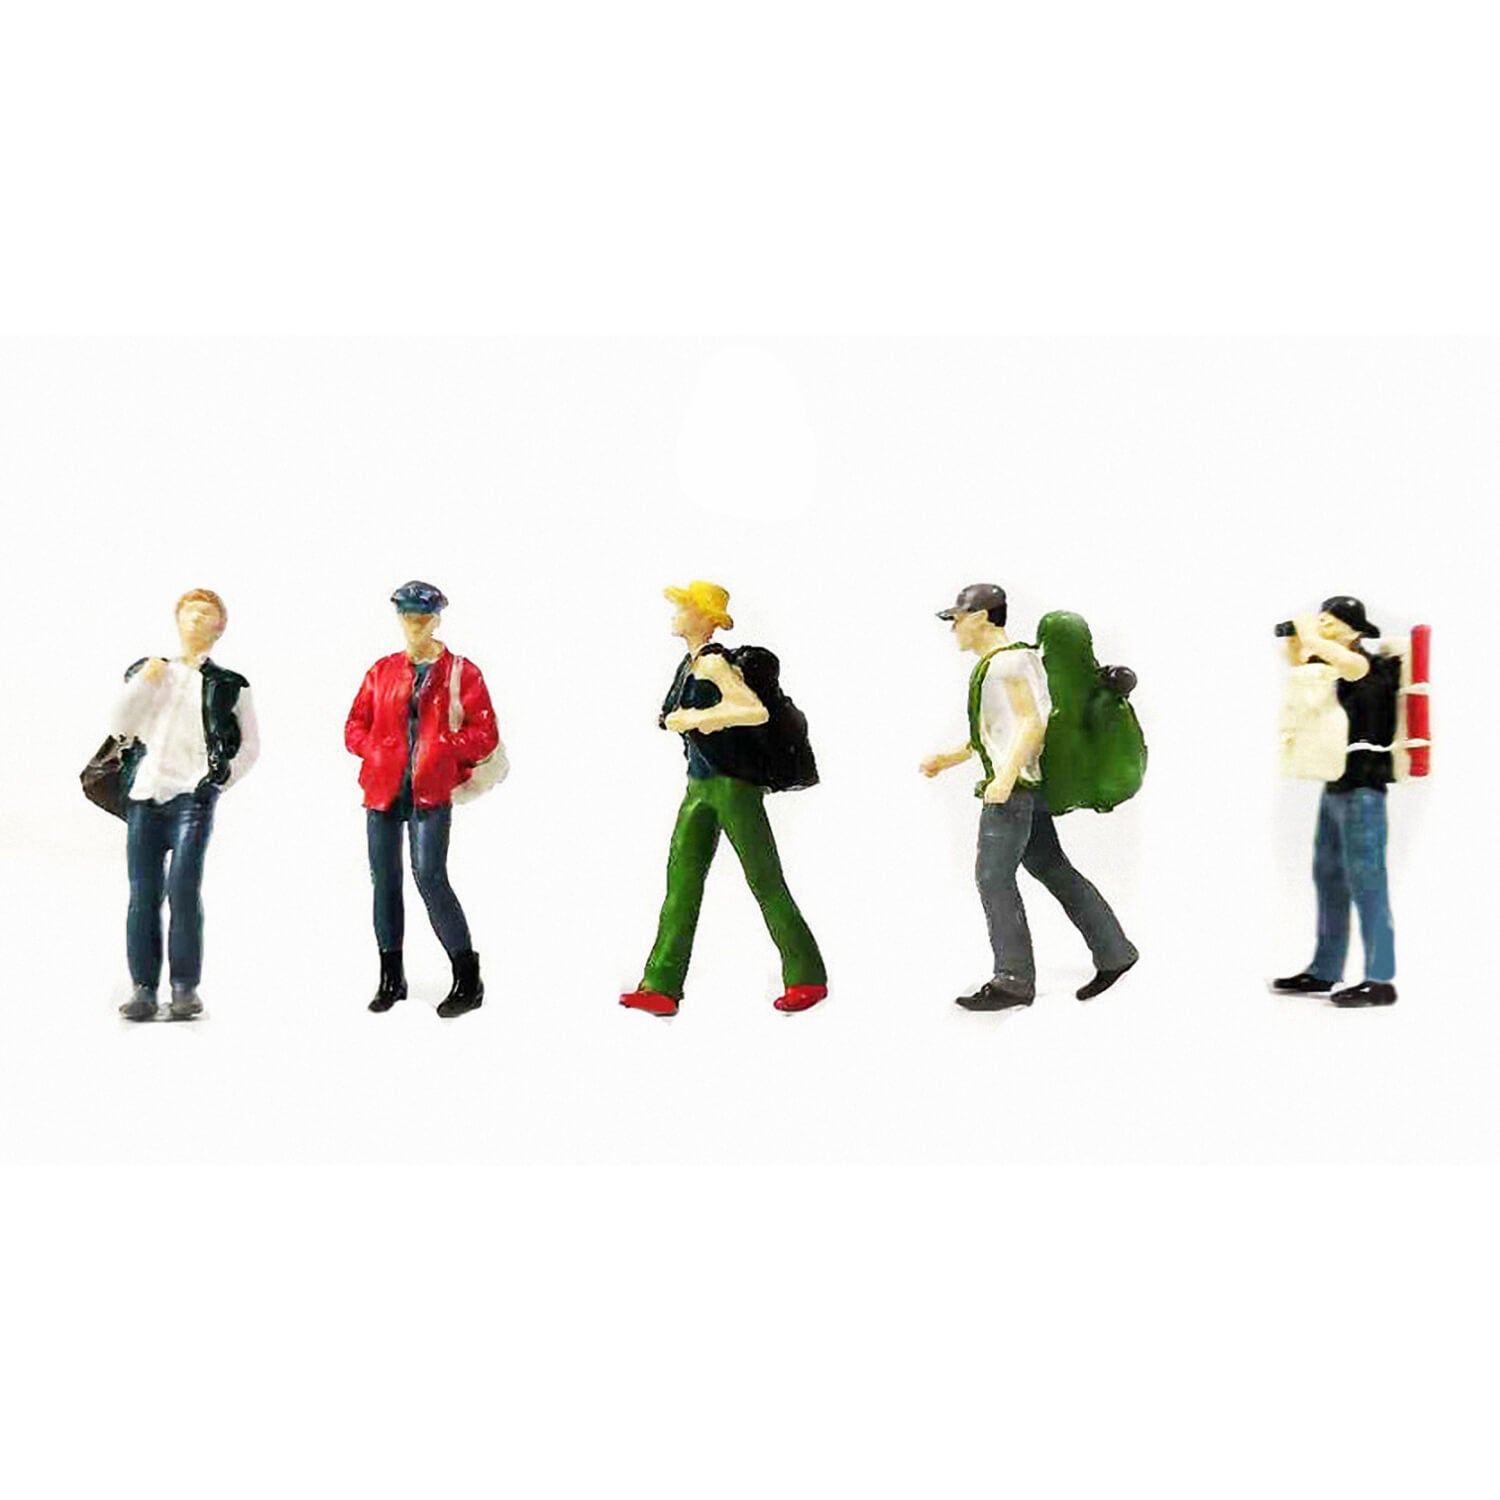 1:64 Scale Figure Backpackers 5 Pcs Set - 164model